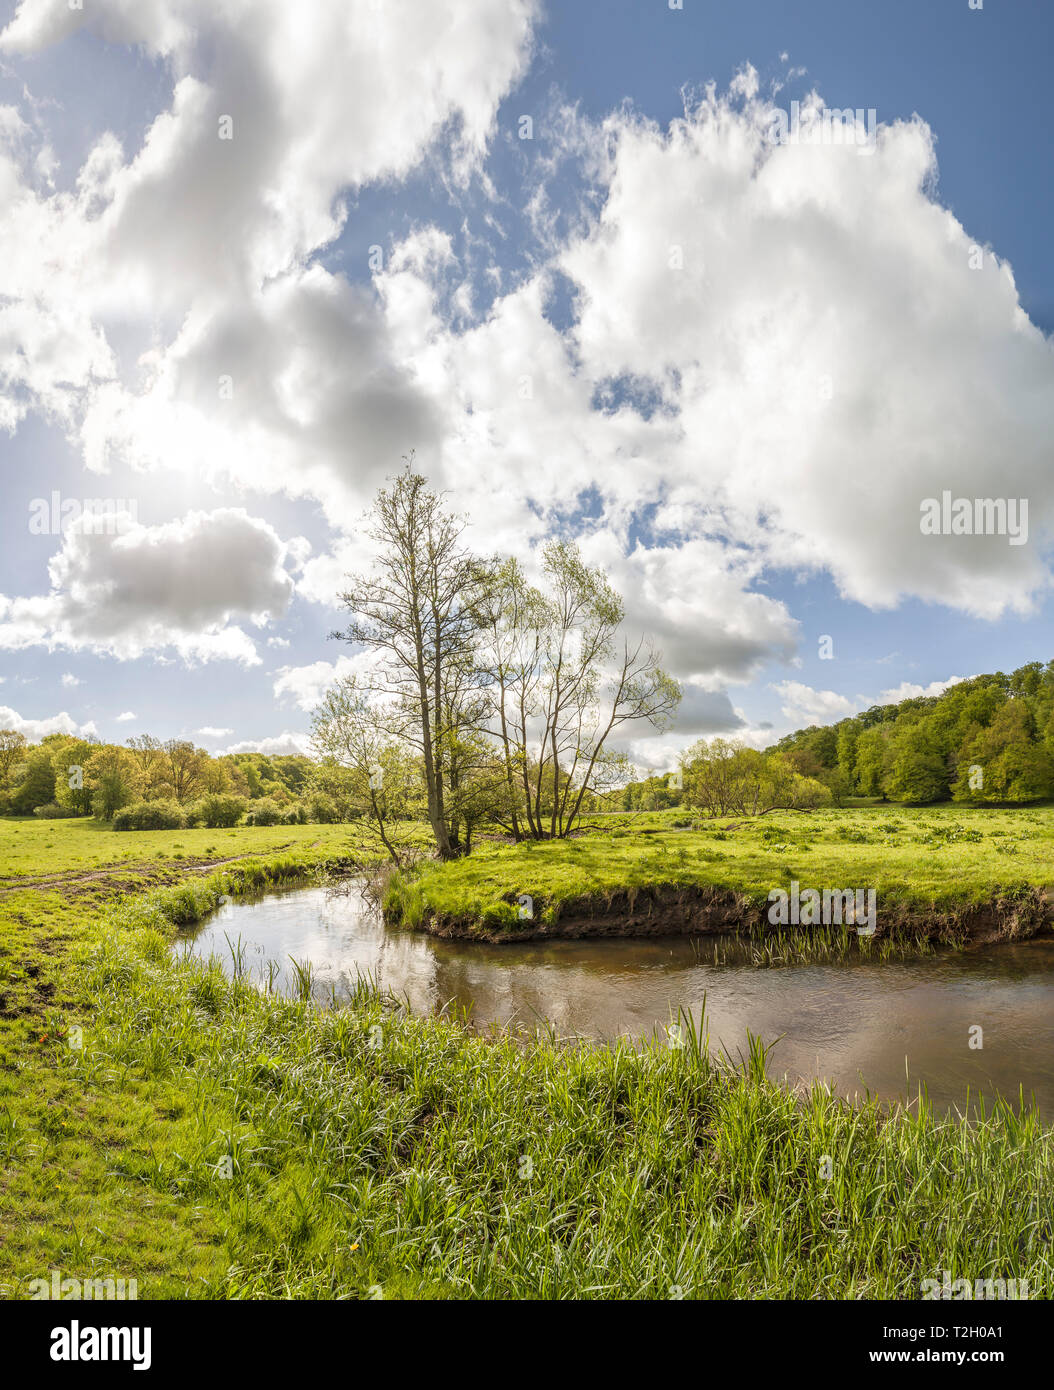 Landscape with small river at Fyledalen valley nature reserve, Tomelilla, Skane, Sweden, Scandinavia. Stock Photo